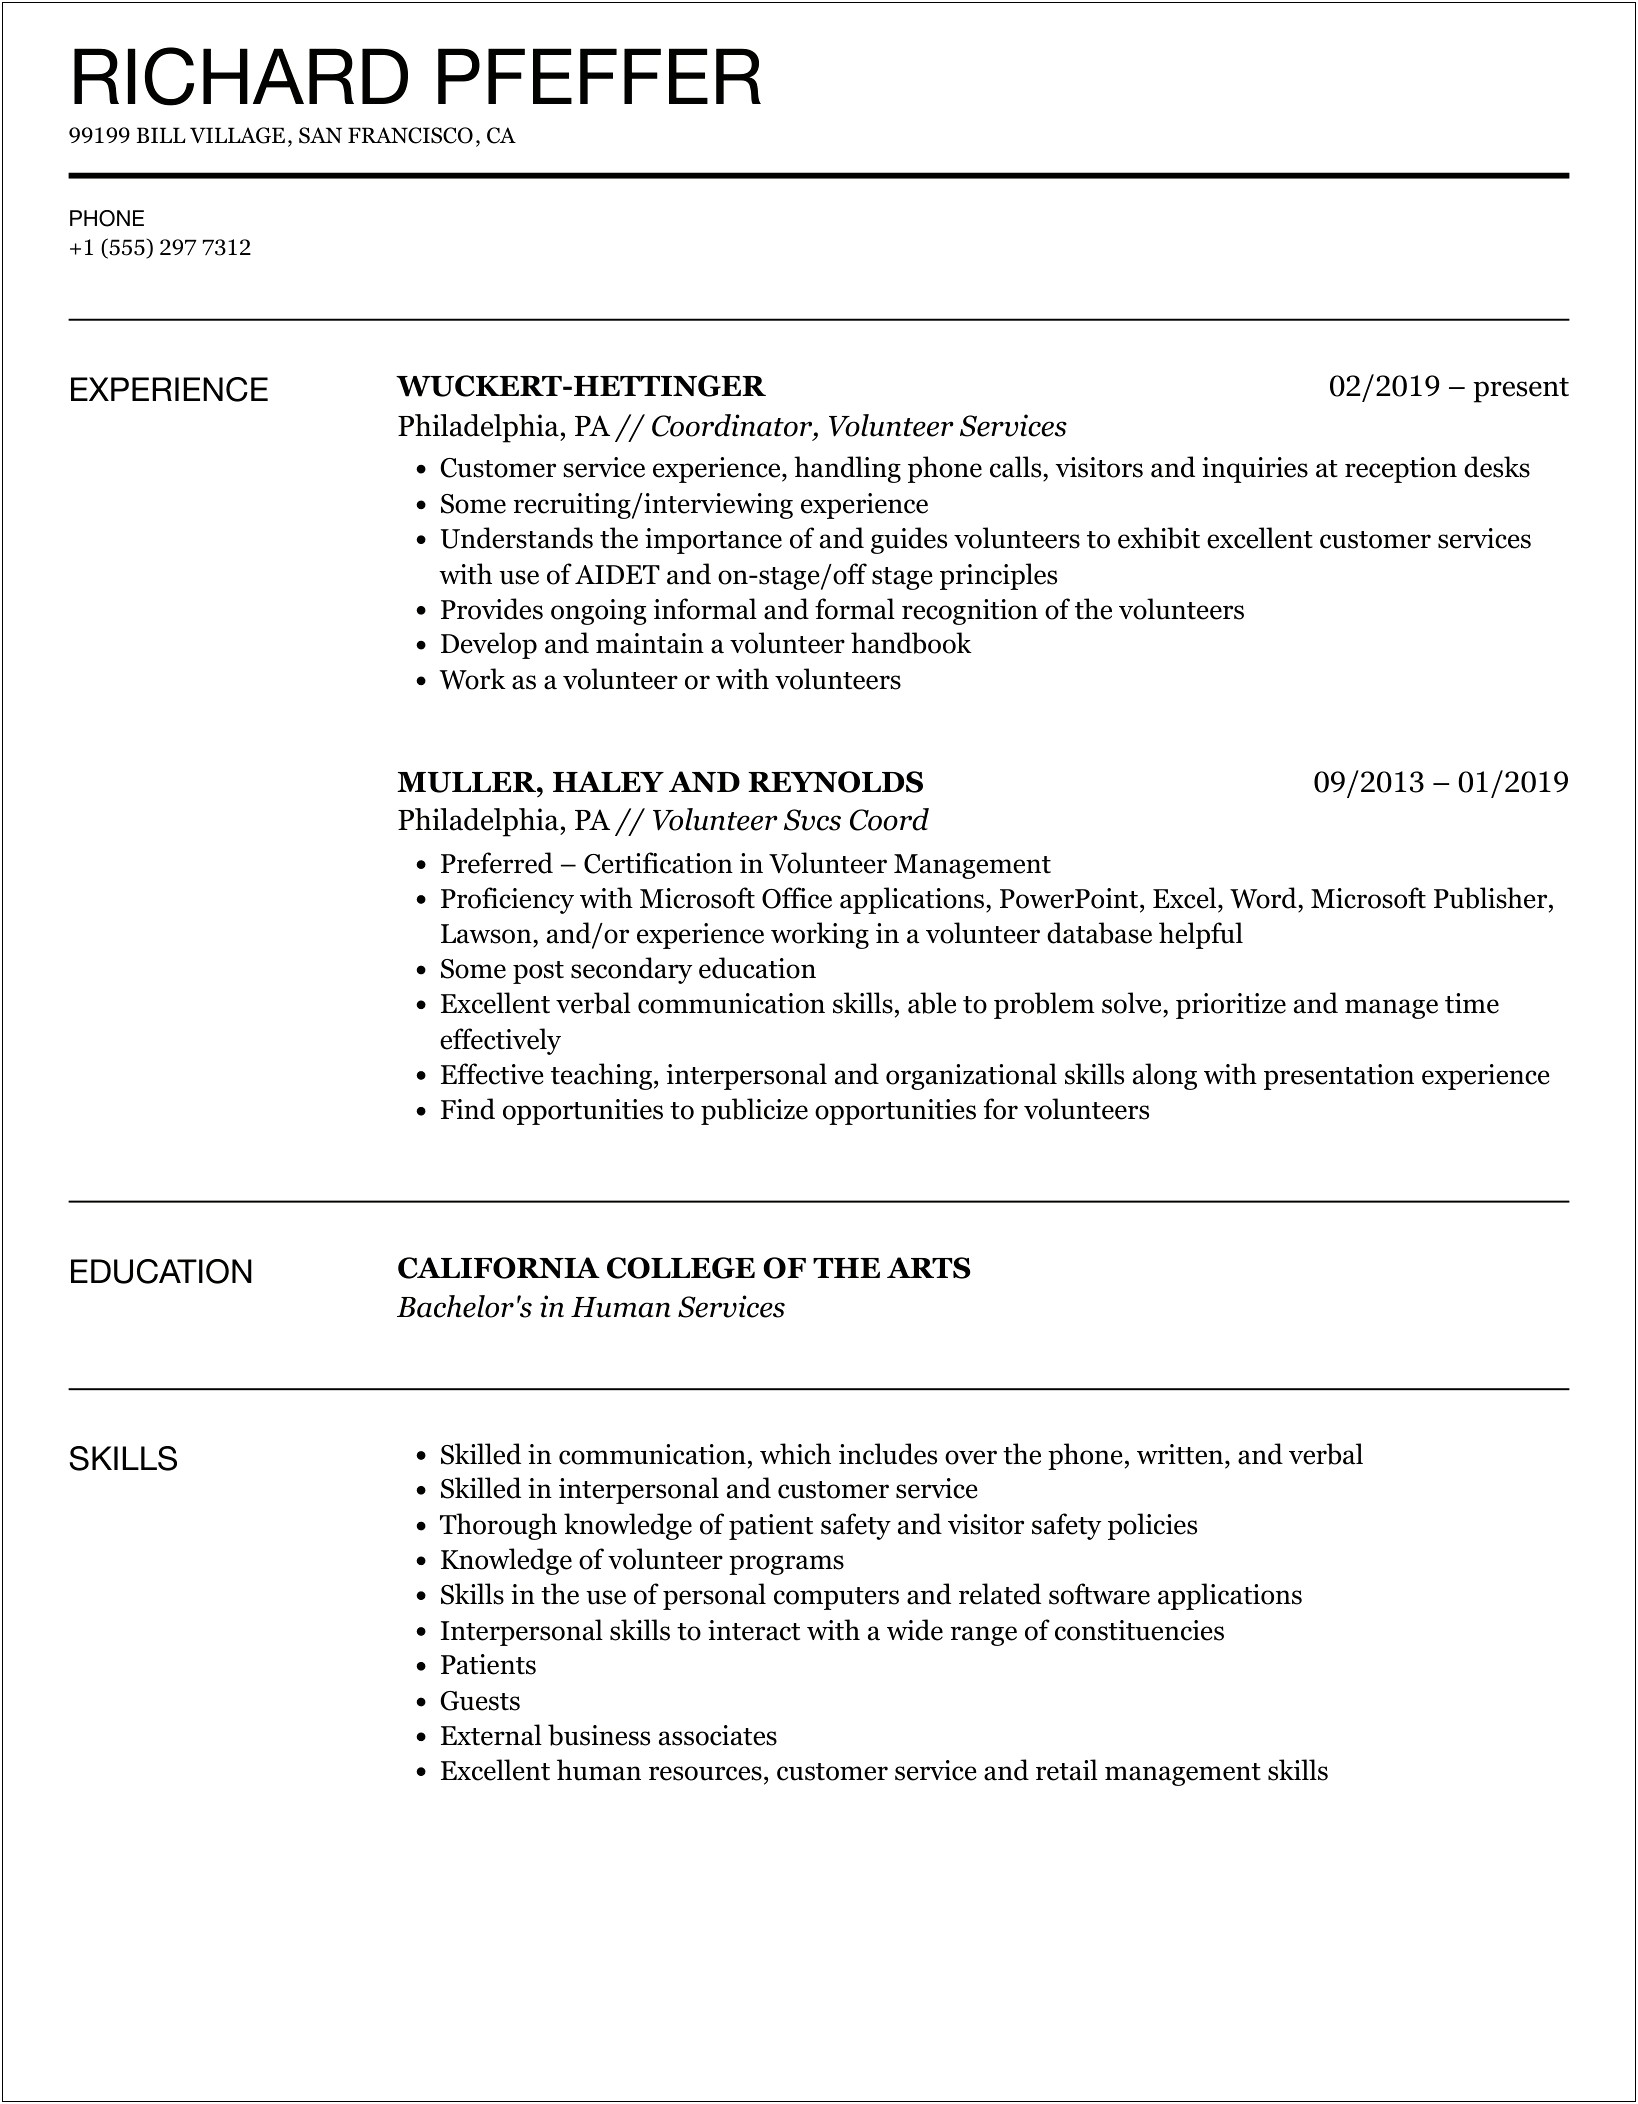 Union Pacific Coach Cleaner Job Description For Resume